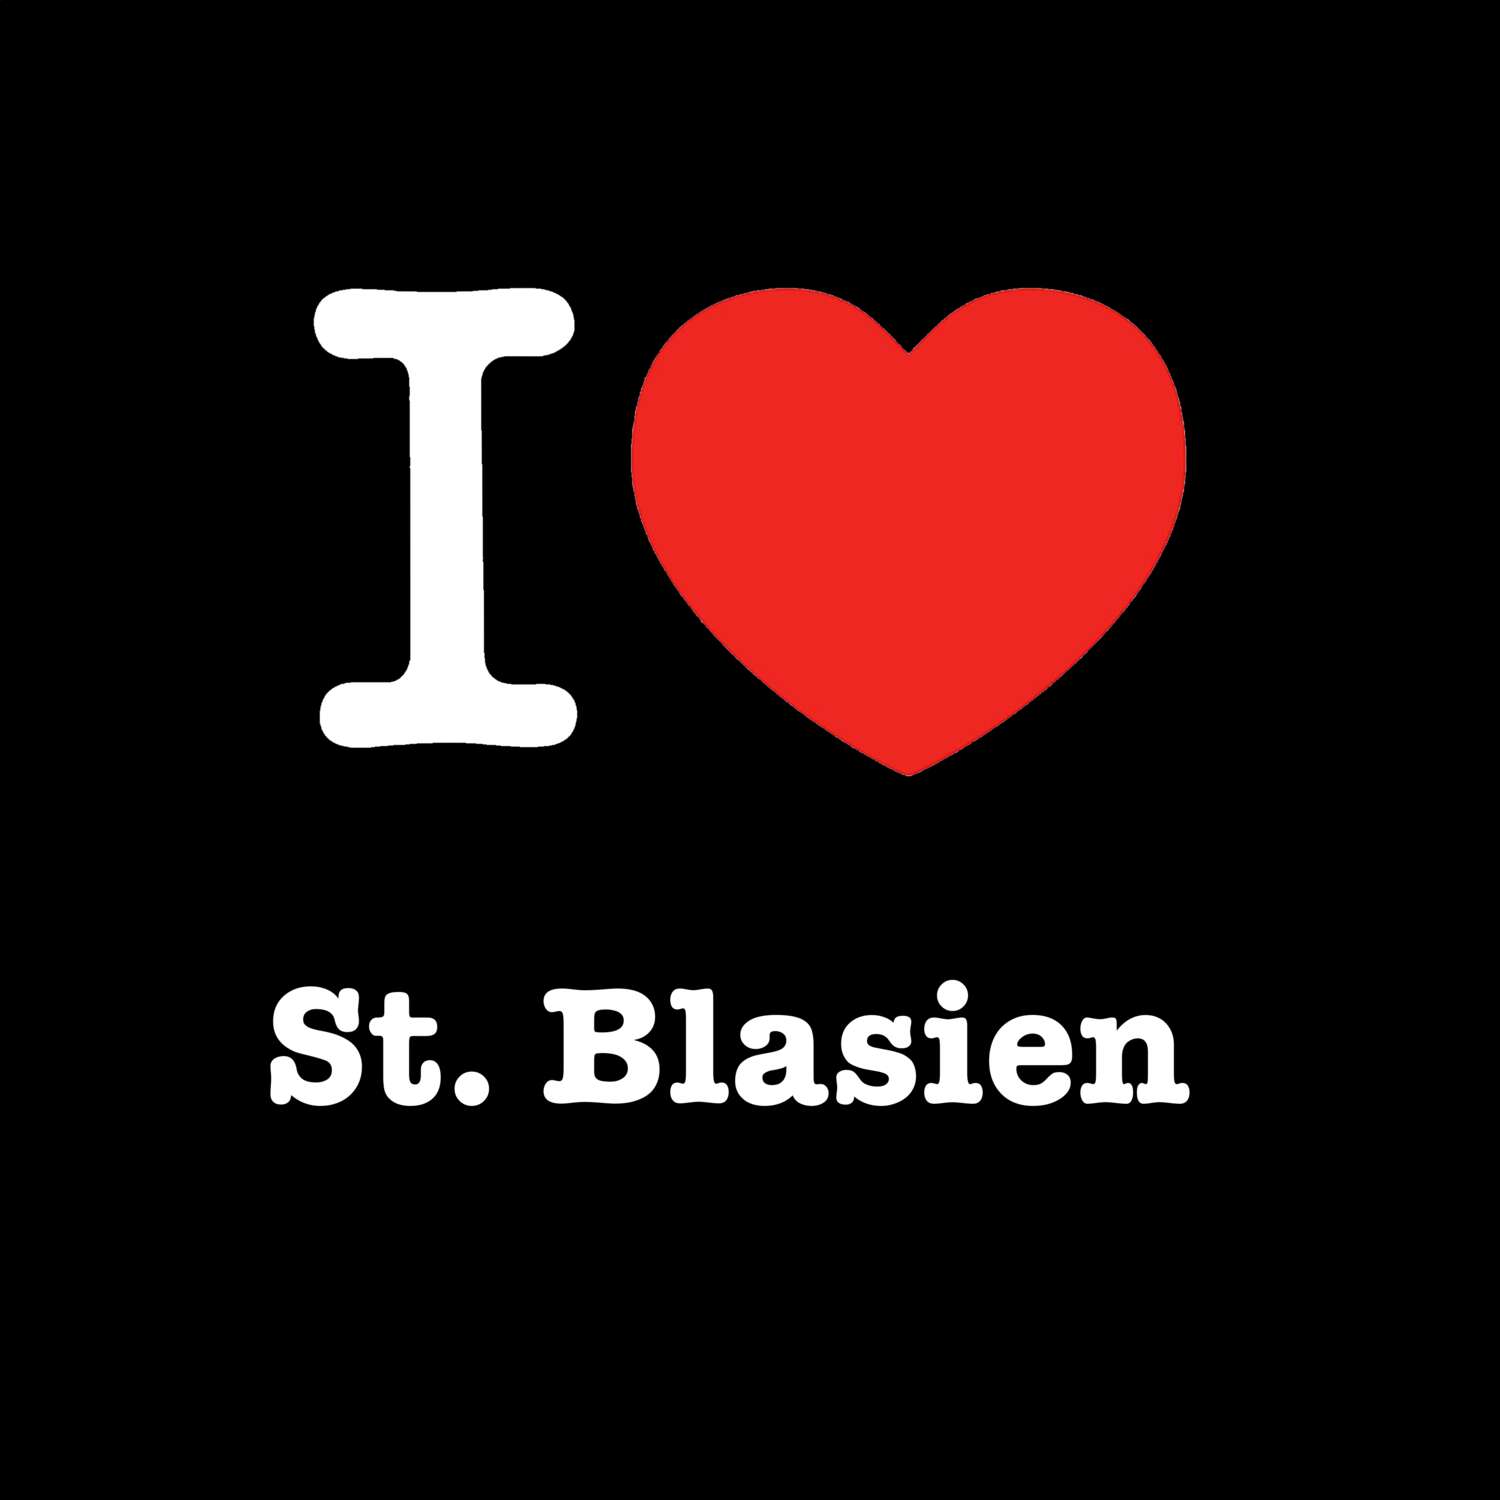 St. Blasien T-Shirt »I love«